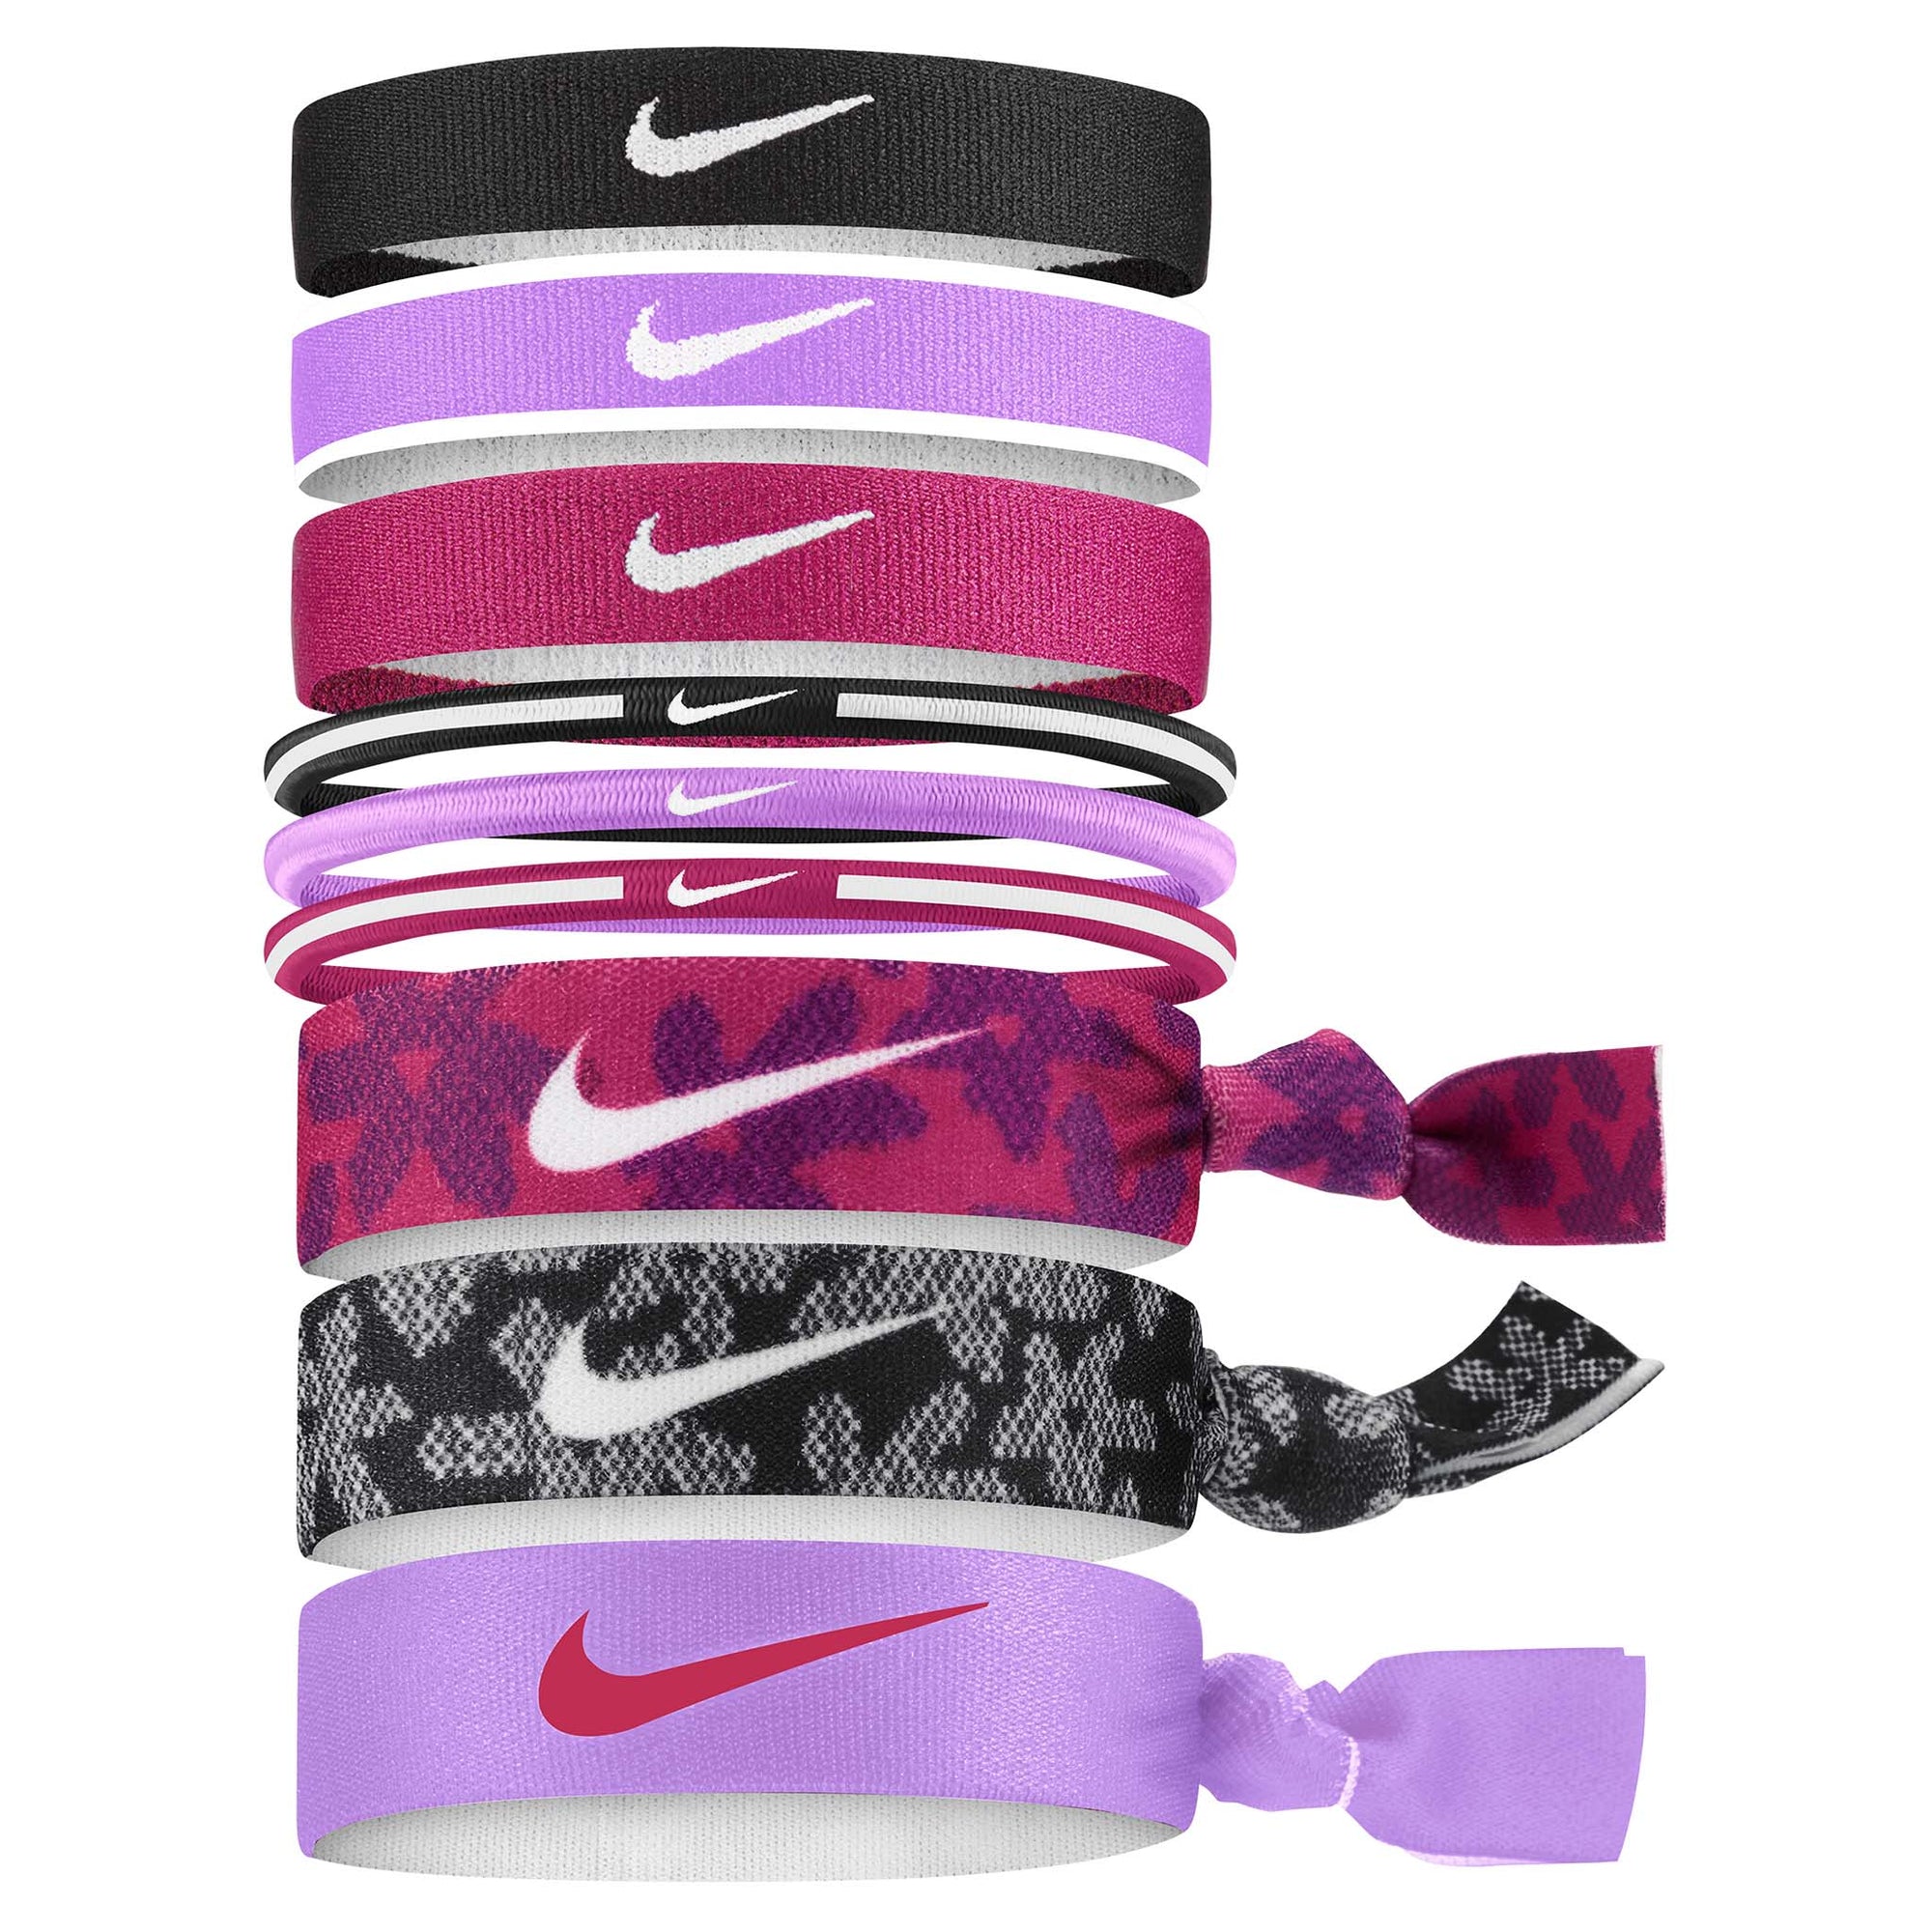 Nike printed 6pk assorted sport headbands for hair - Soccer Sport Fitness